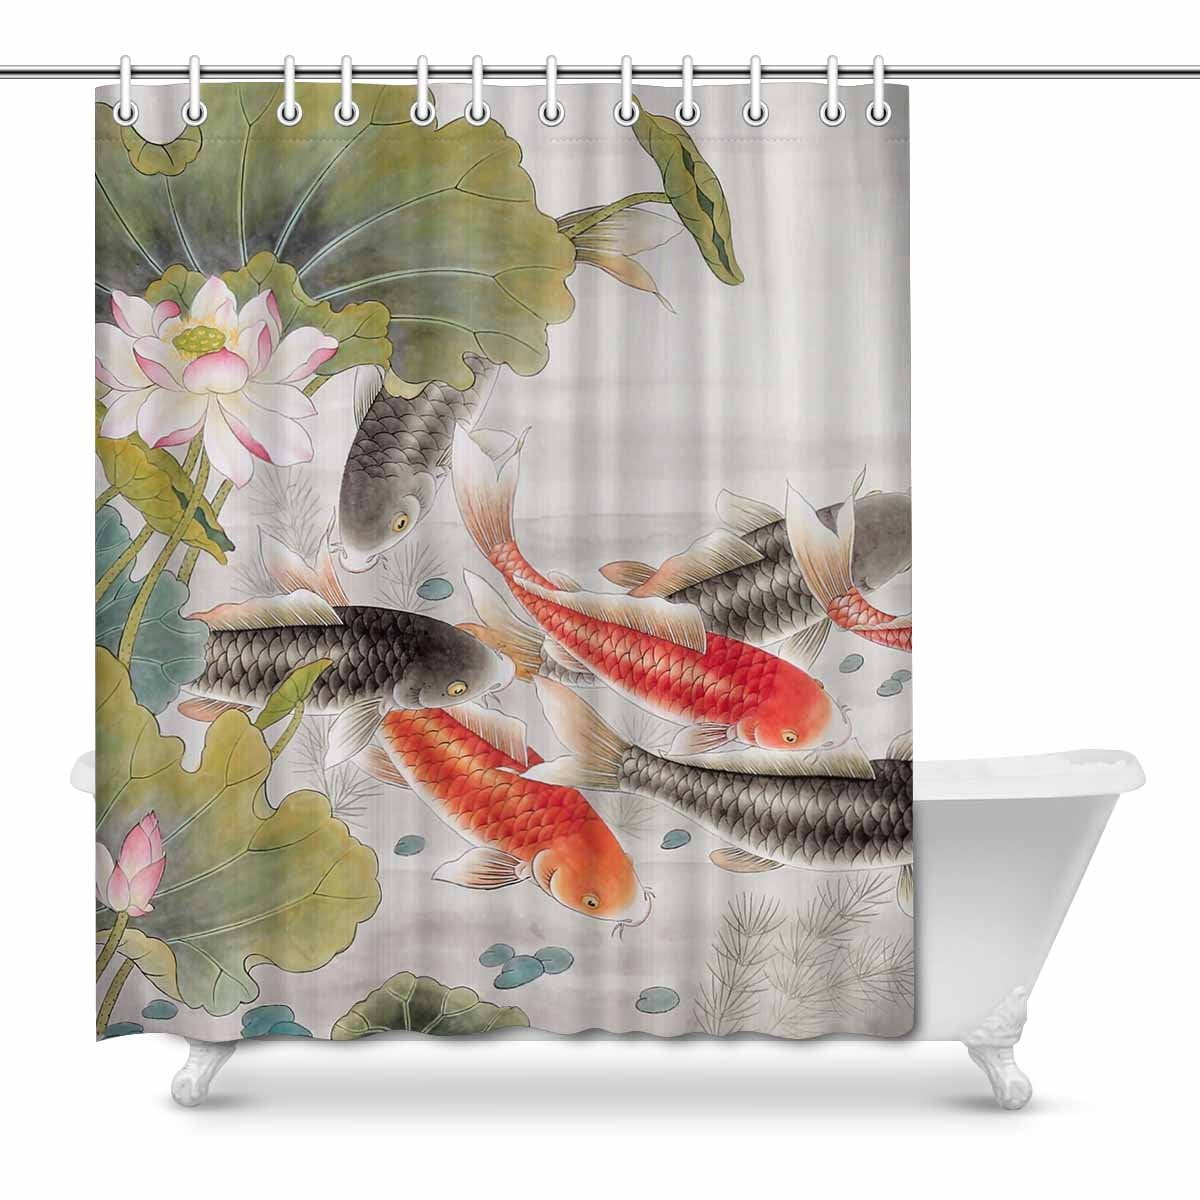 Waterproof Fabric & Hooks Shower Curtain Swimming Goldfish Bath Accessory Sets 